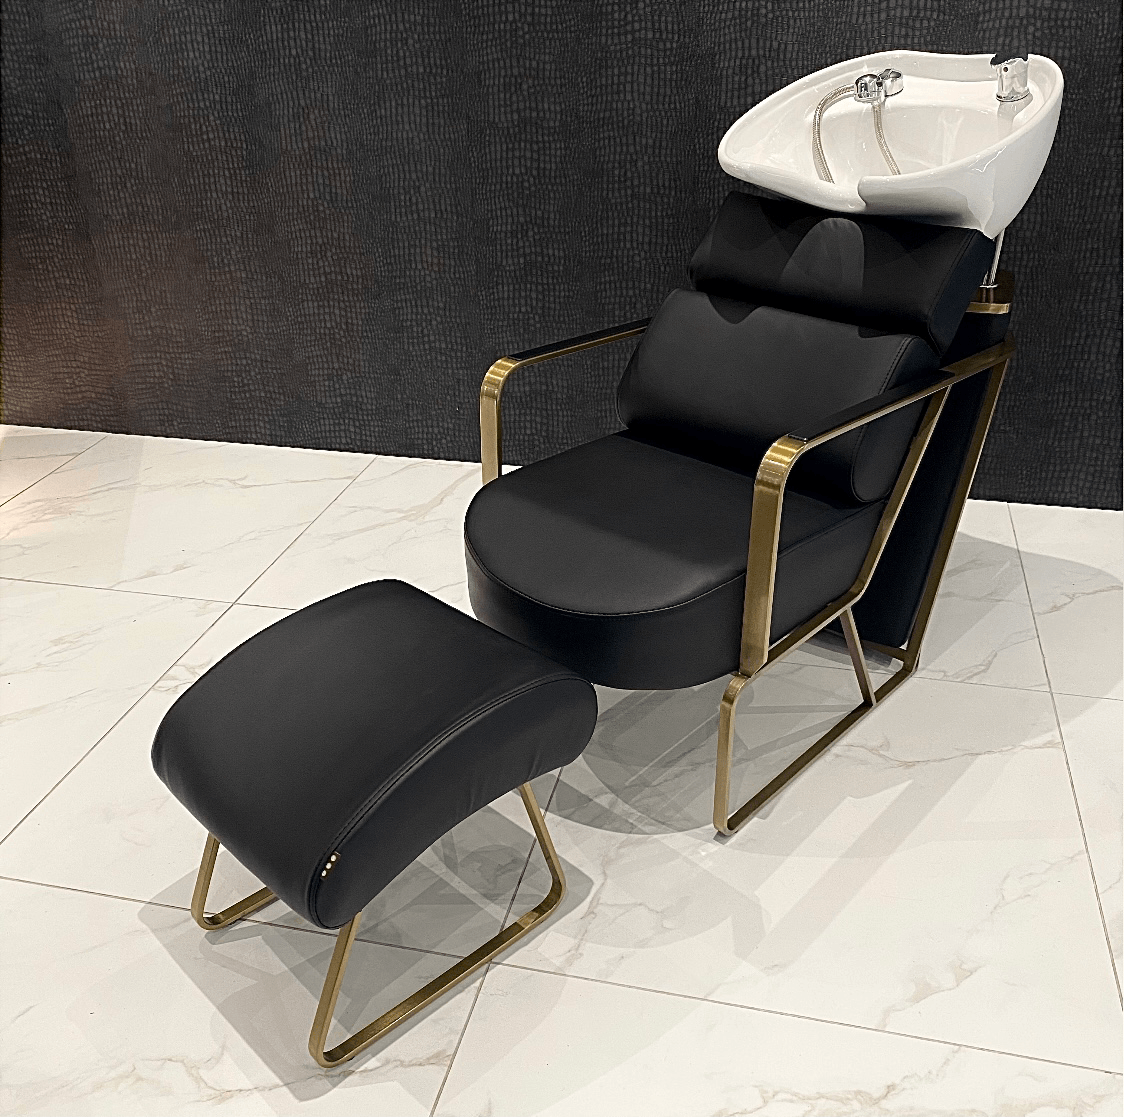 Black & Gold Salon Leg Rest by SEC